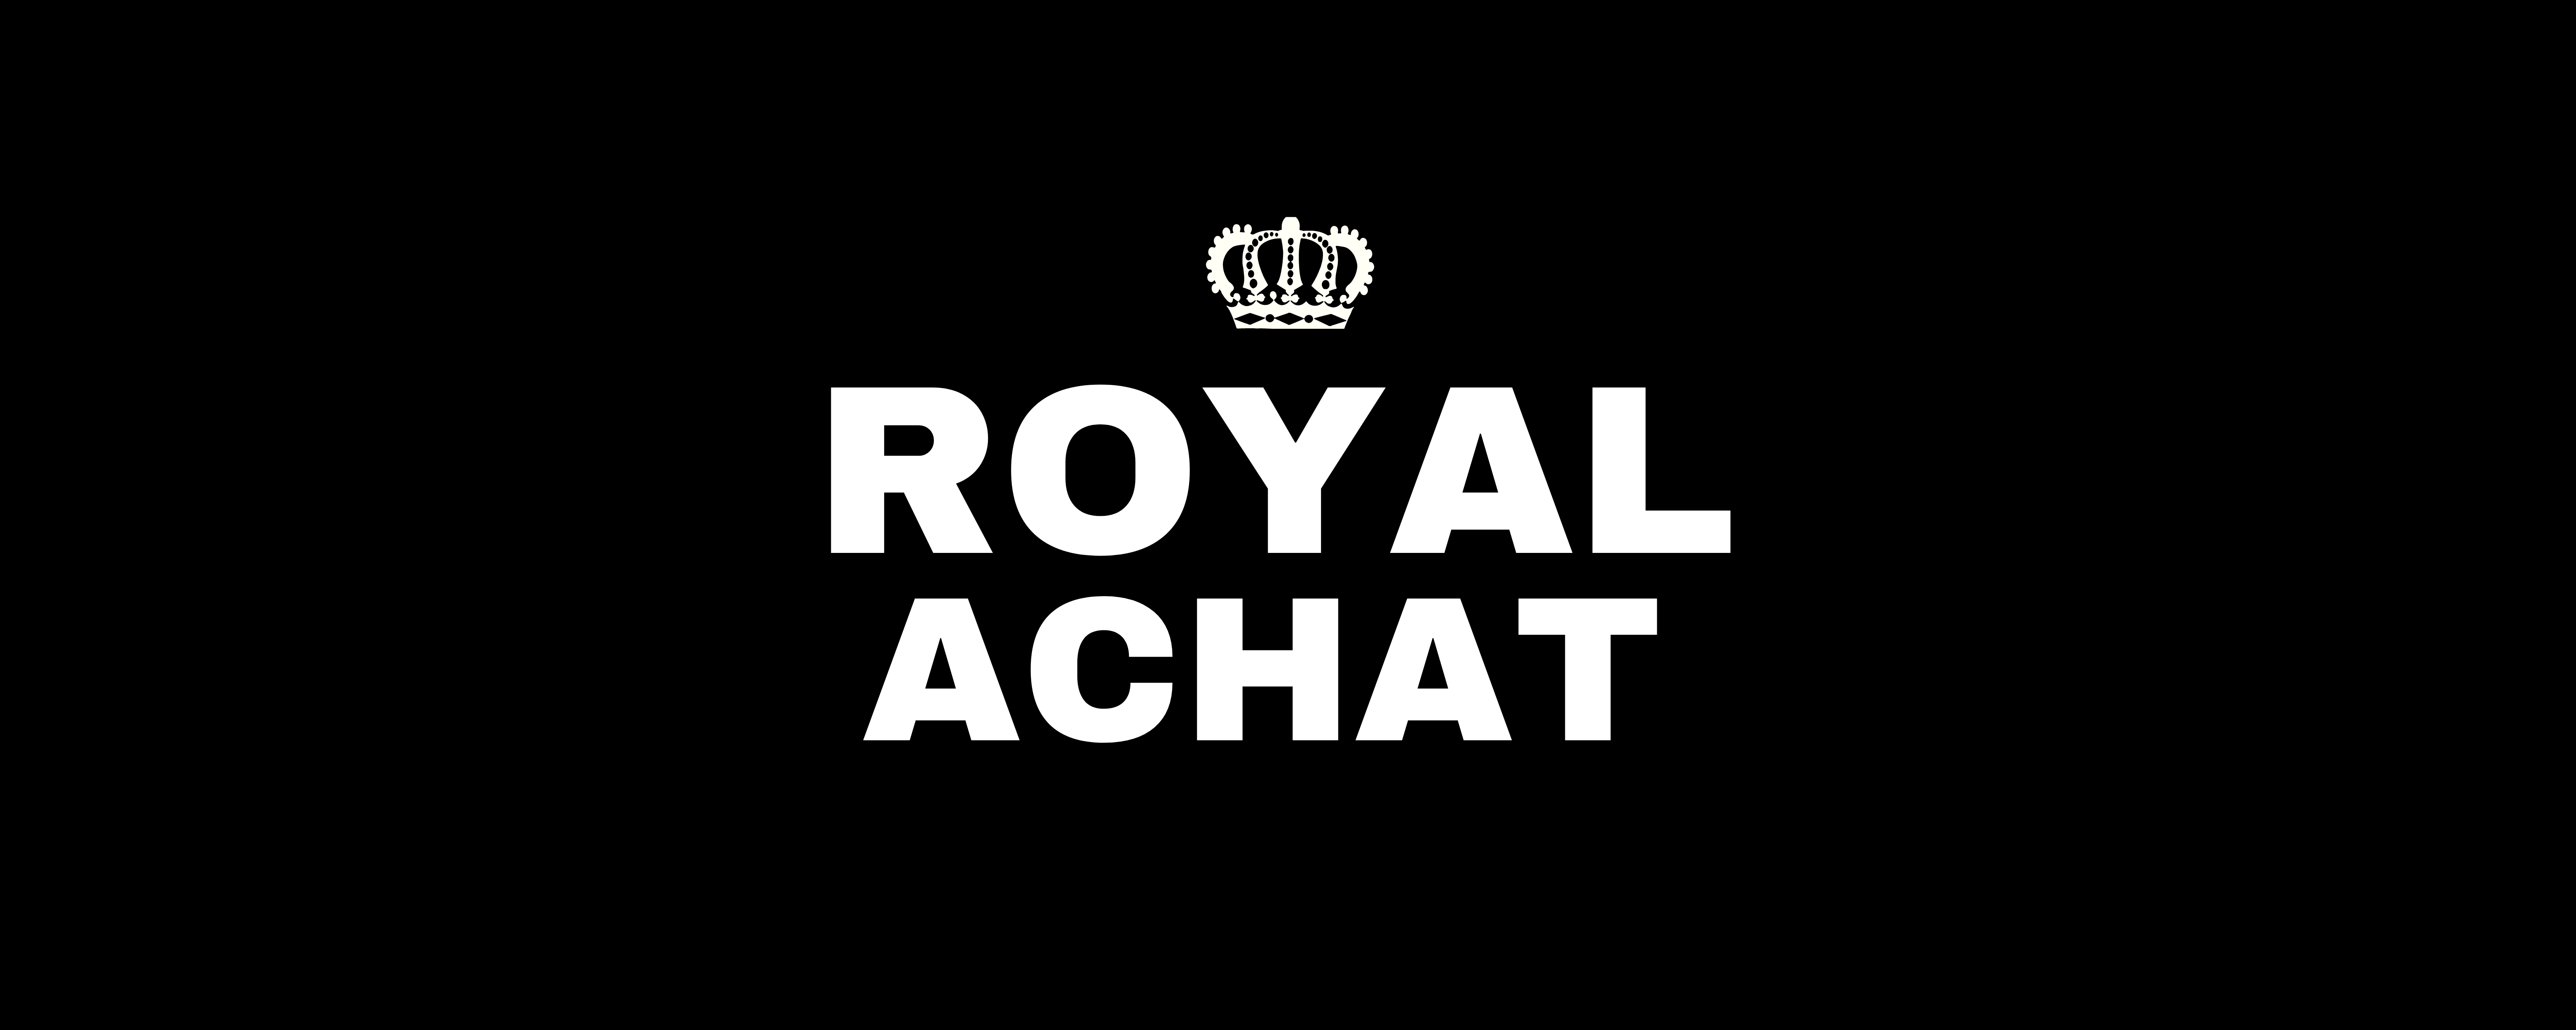 Royal Achat